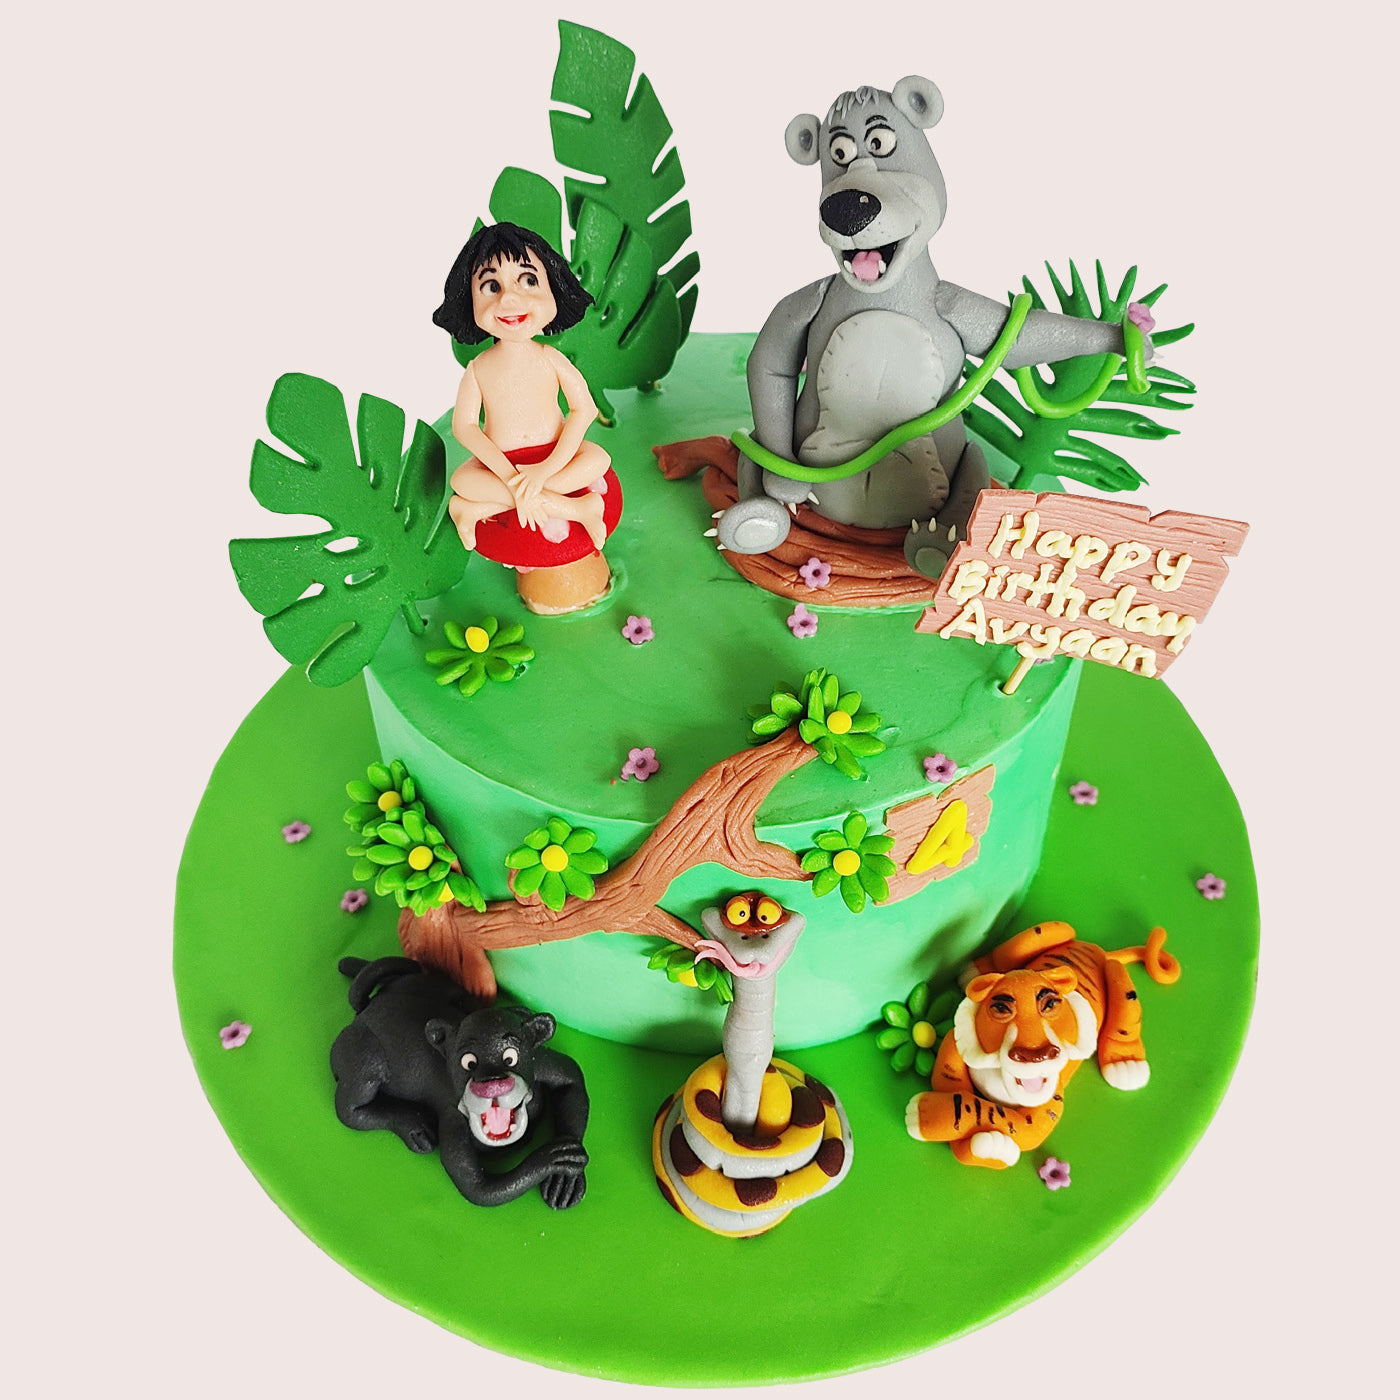 The Jungle Book - Mowgli - Decorated Cake by zjedzma - CakesDecor